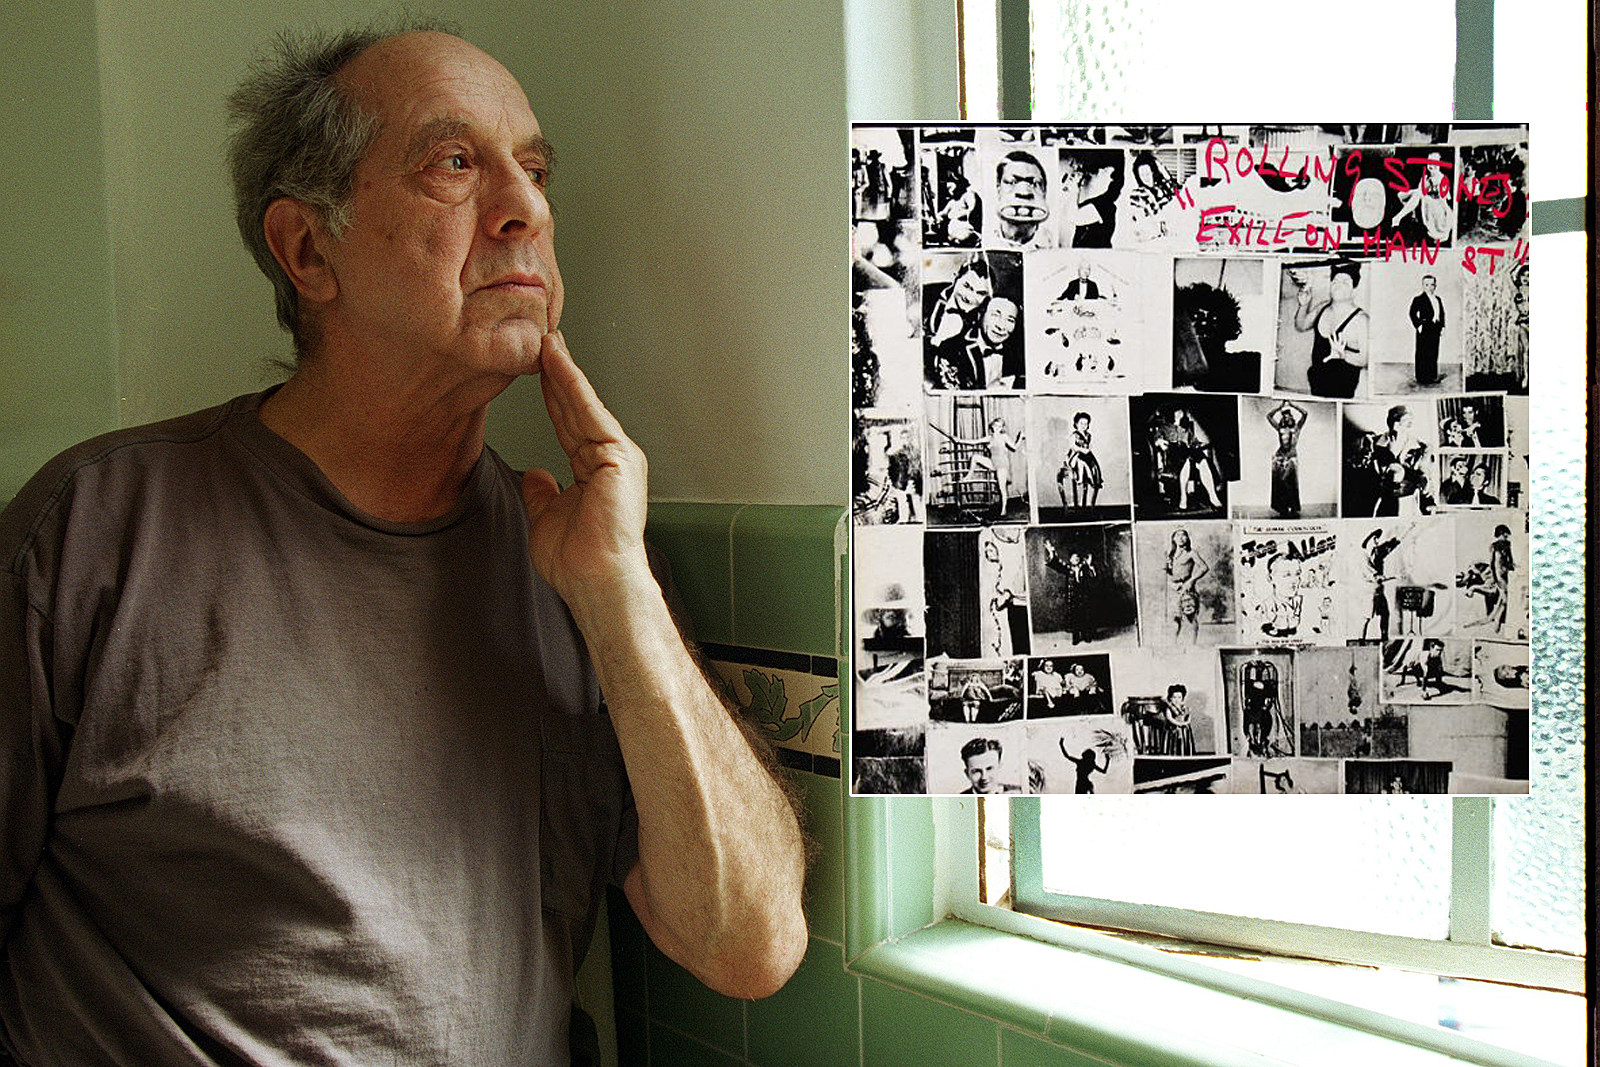 Robert Frank, 'Exile on Main St.' Photographer, Dies